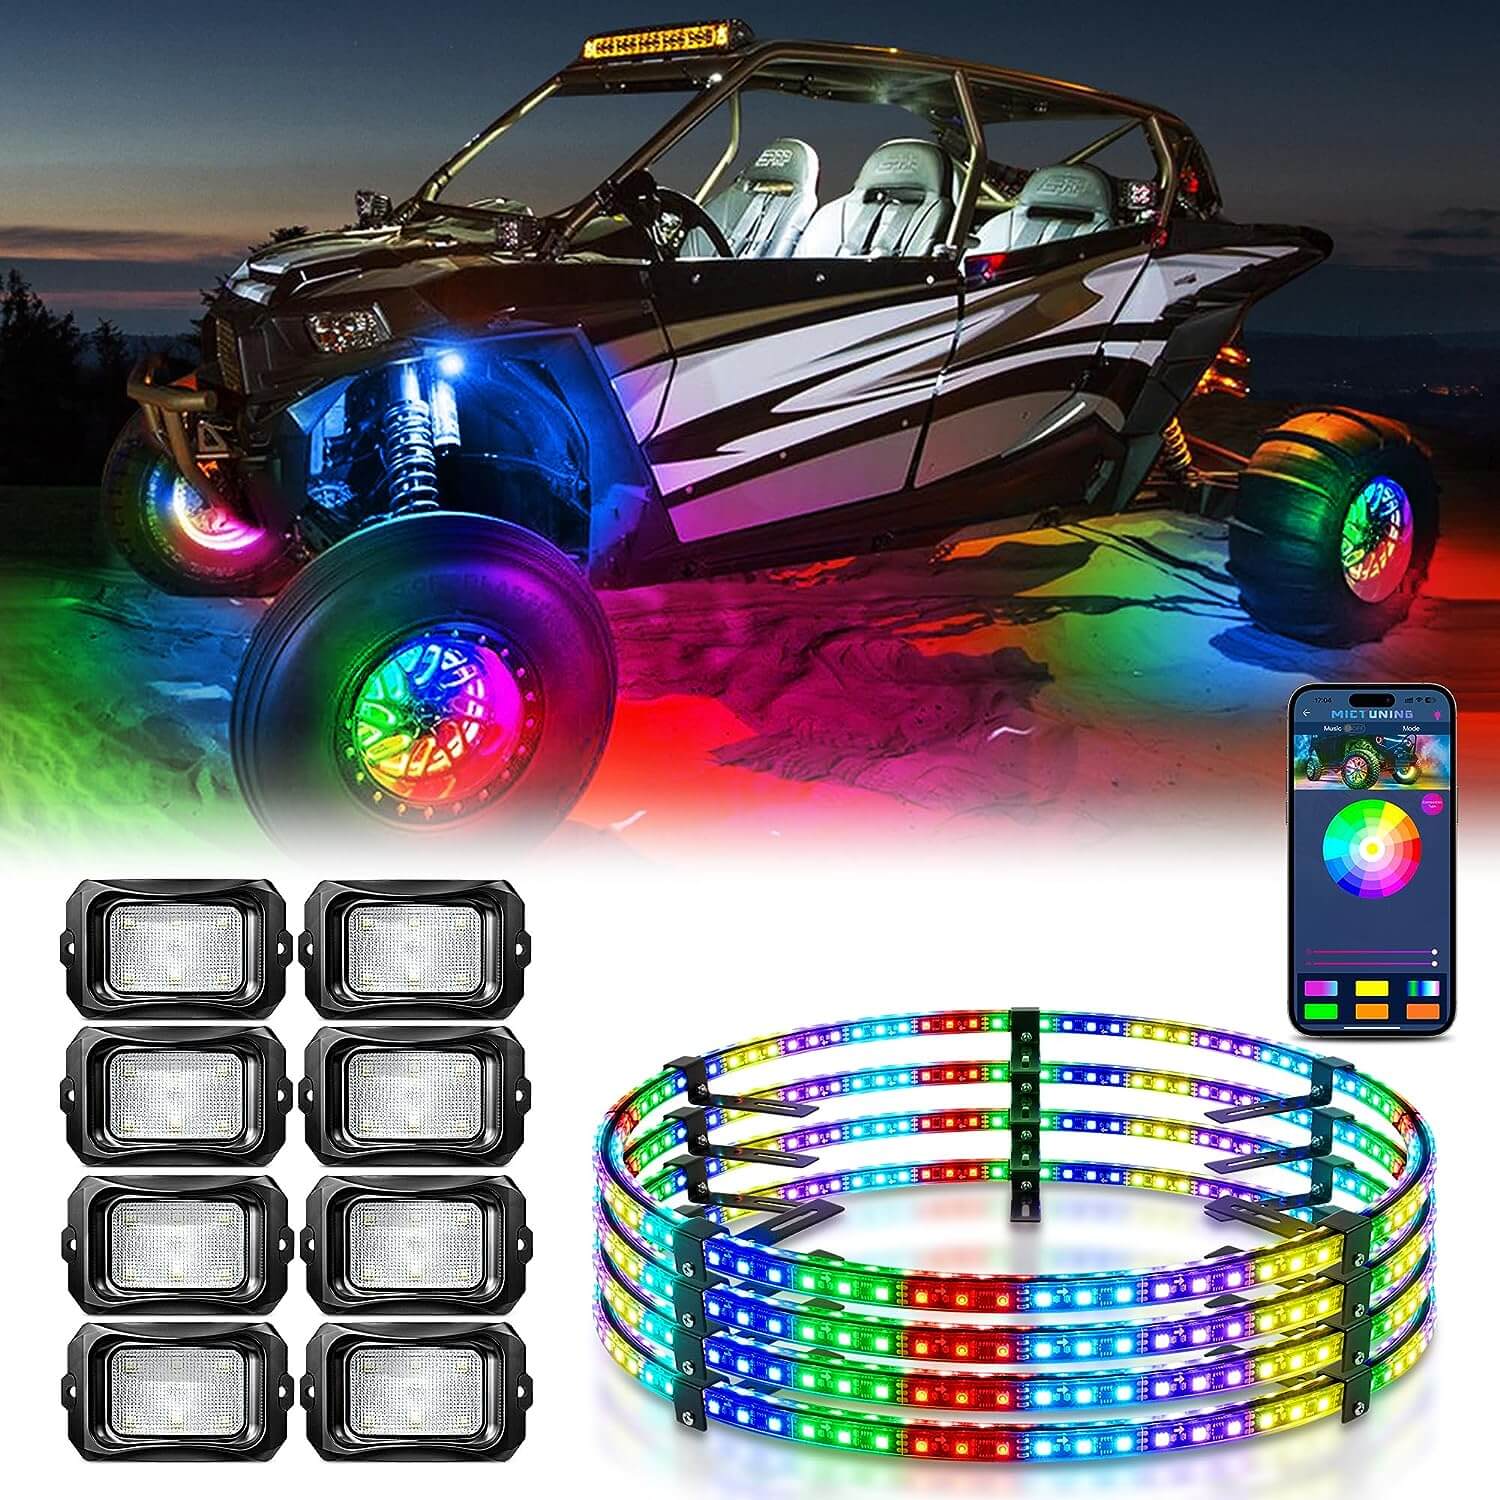 C2 RGB+IC LED Rock Lights Kit 8/12 Pods Bundle with 15.5″/17″ V1 RGB+IC Wheel Ring Lights Kit